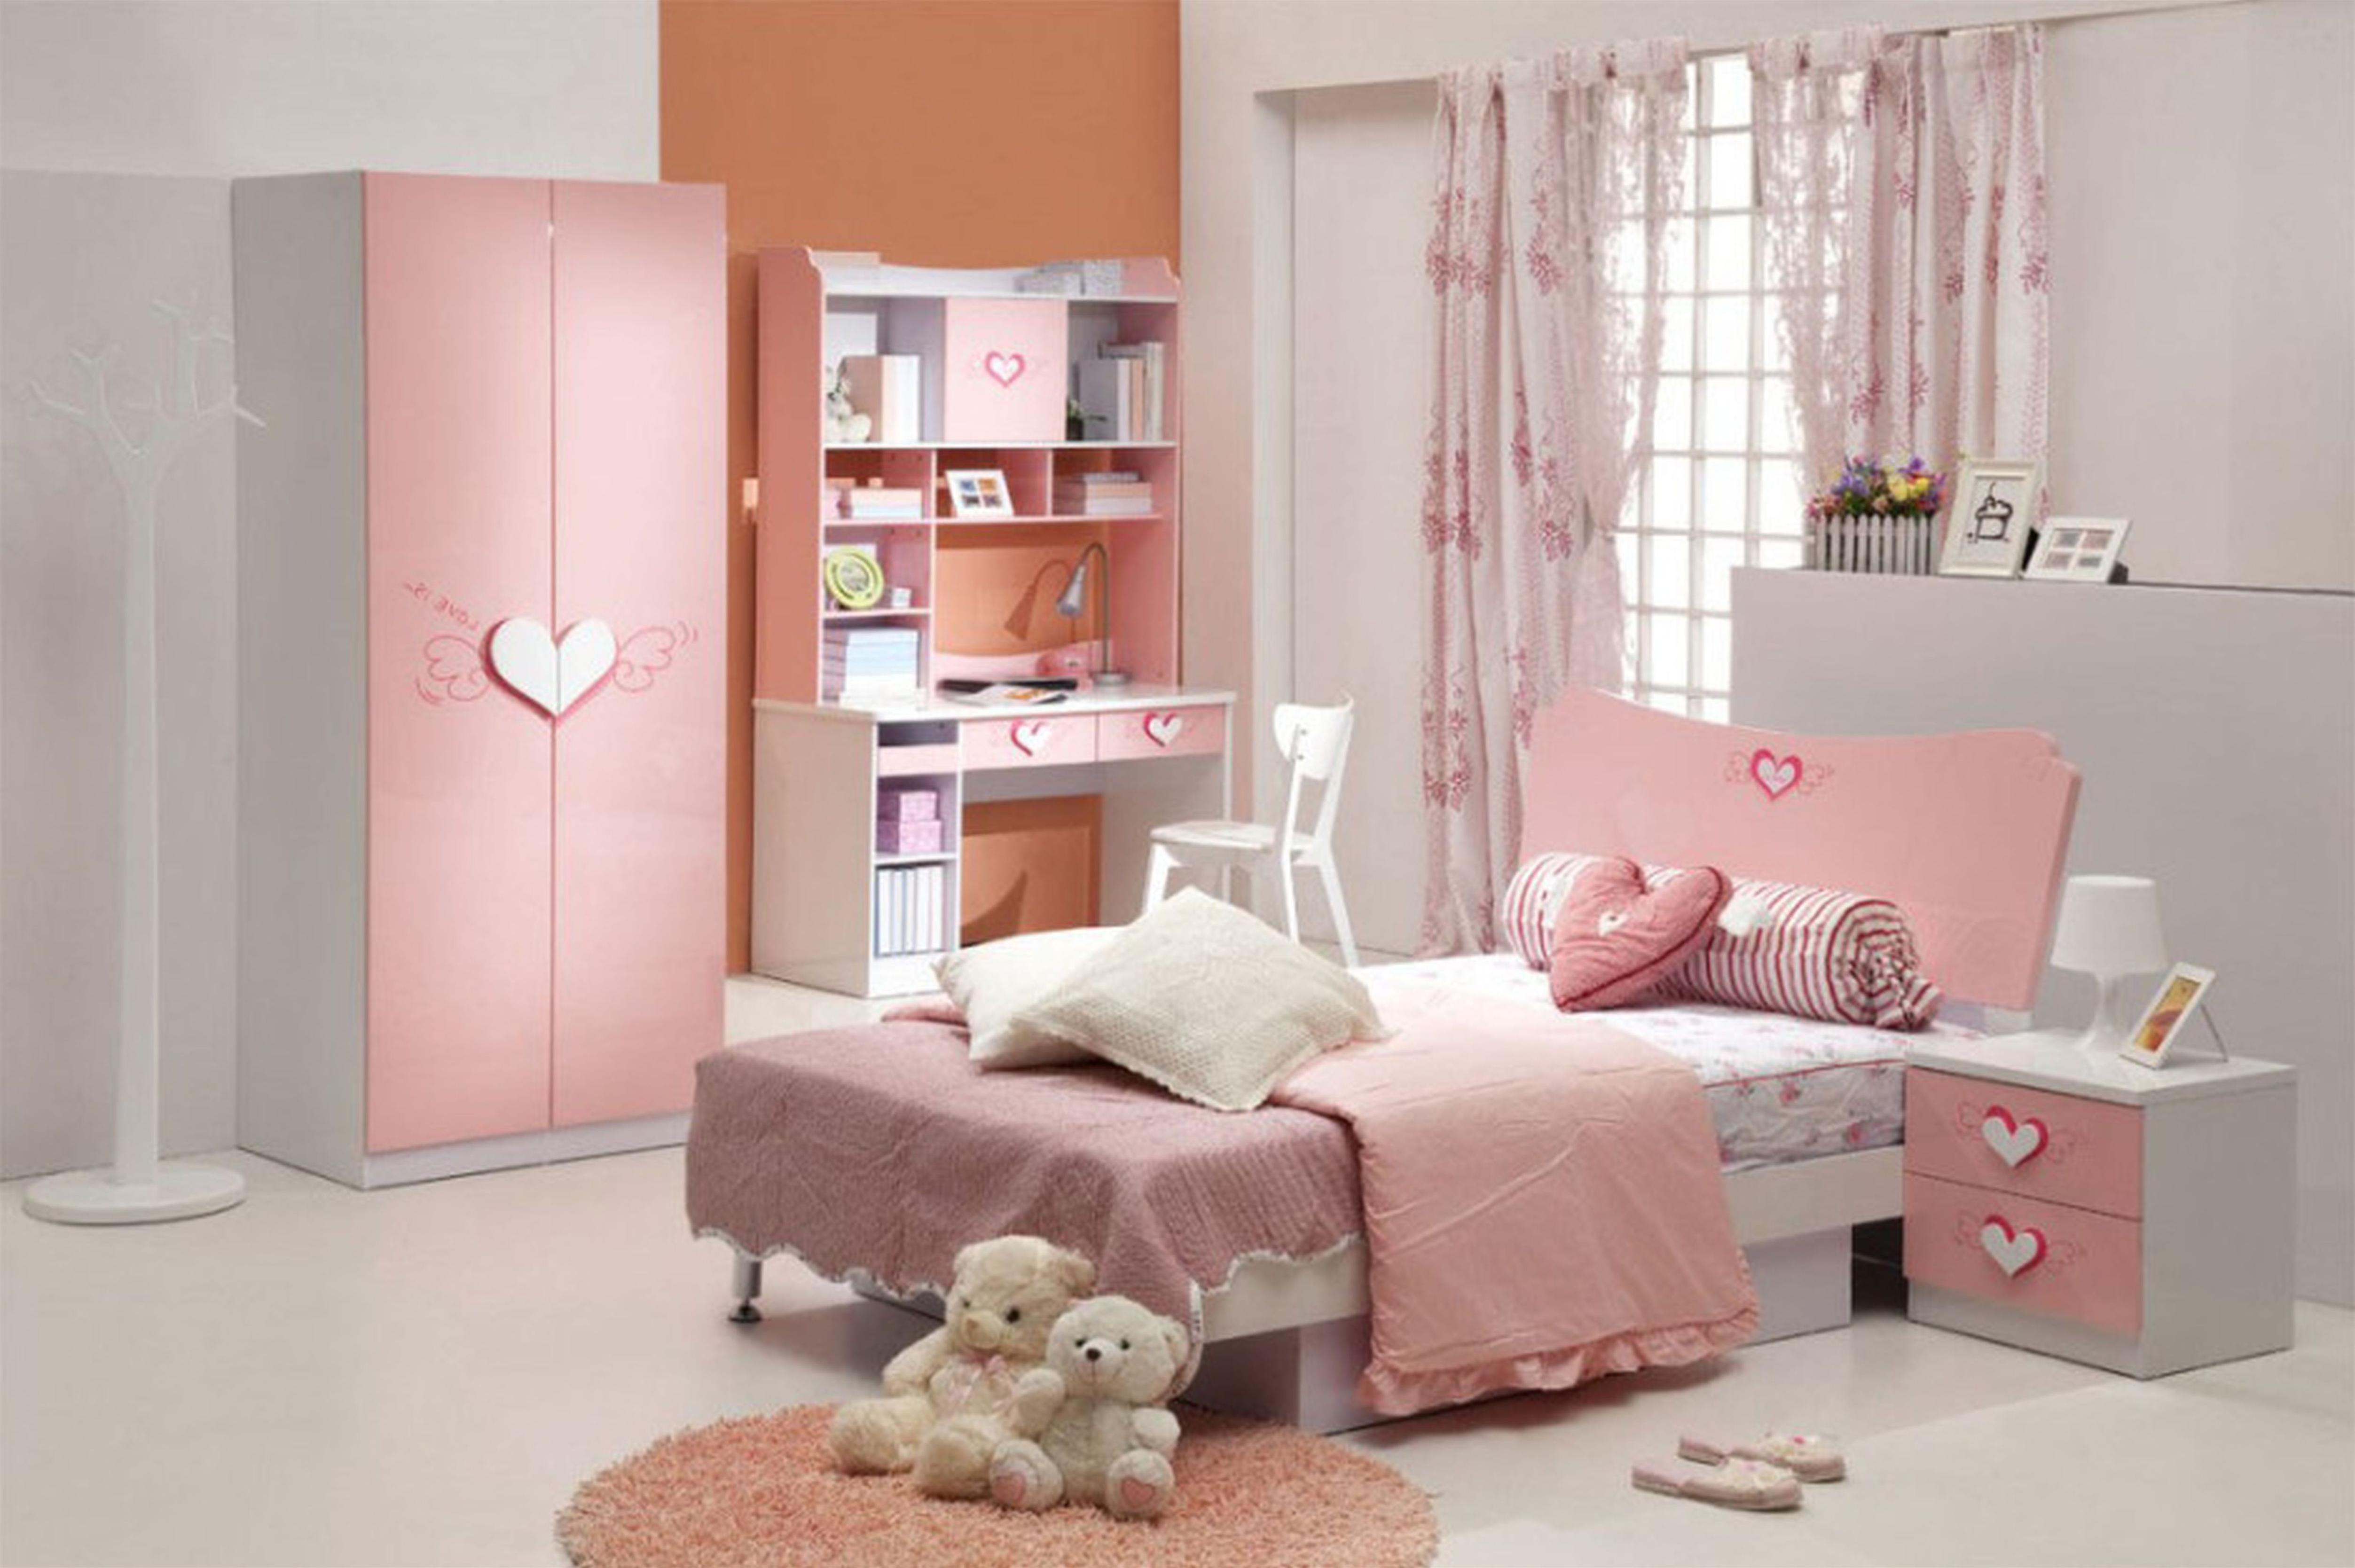 Teenage Bedroom Ideas For Teens Themes Of Homes regarding dimensions 5010 X 3336